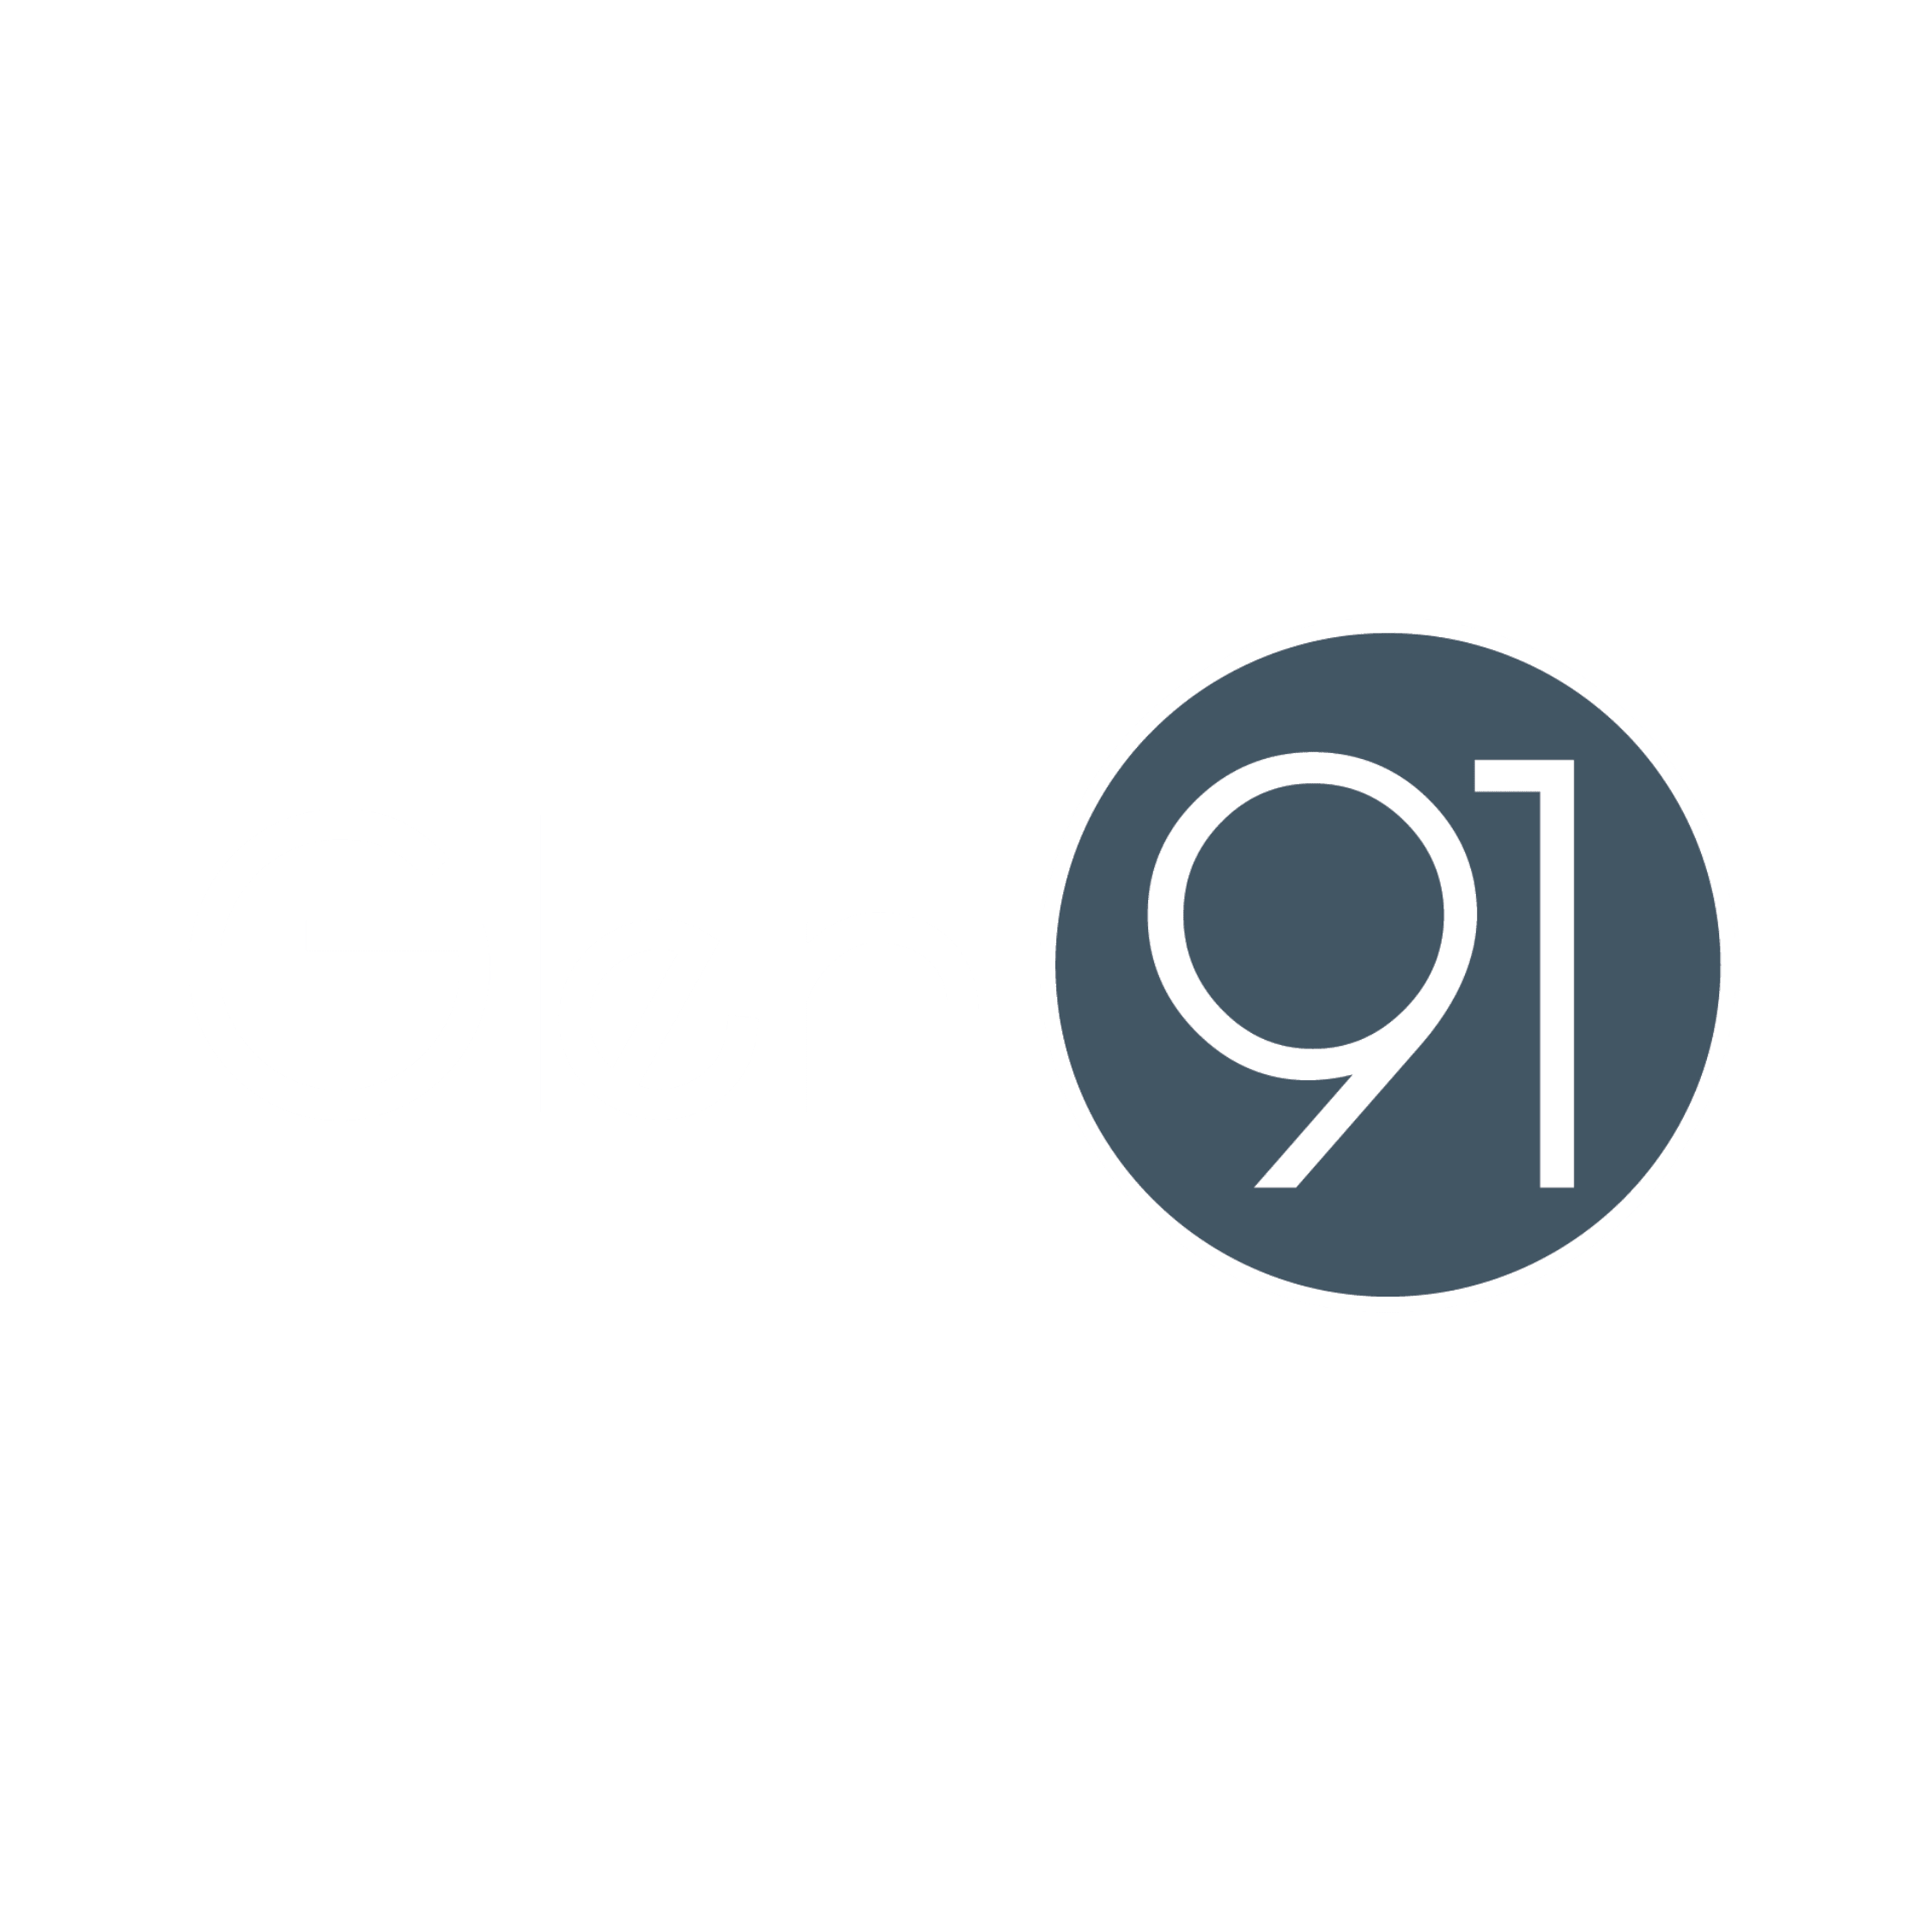 Update 188+ glen logo latest